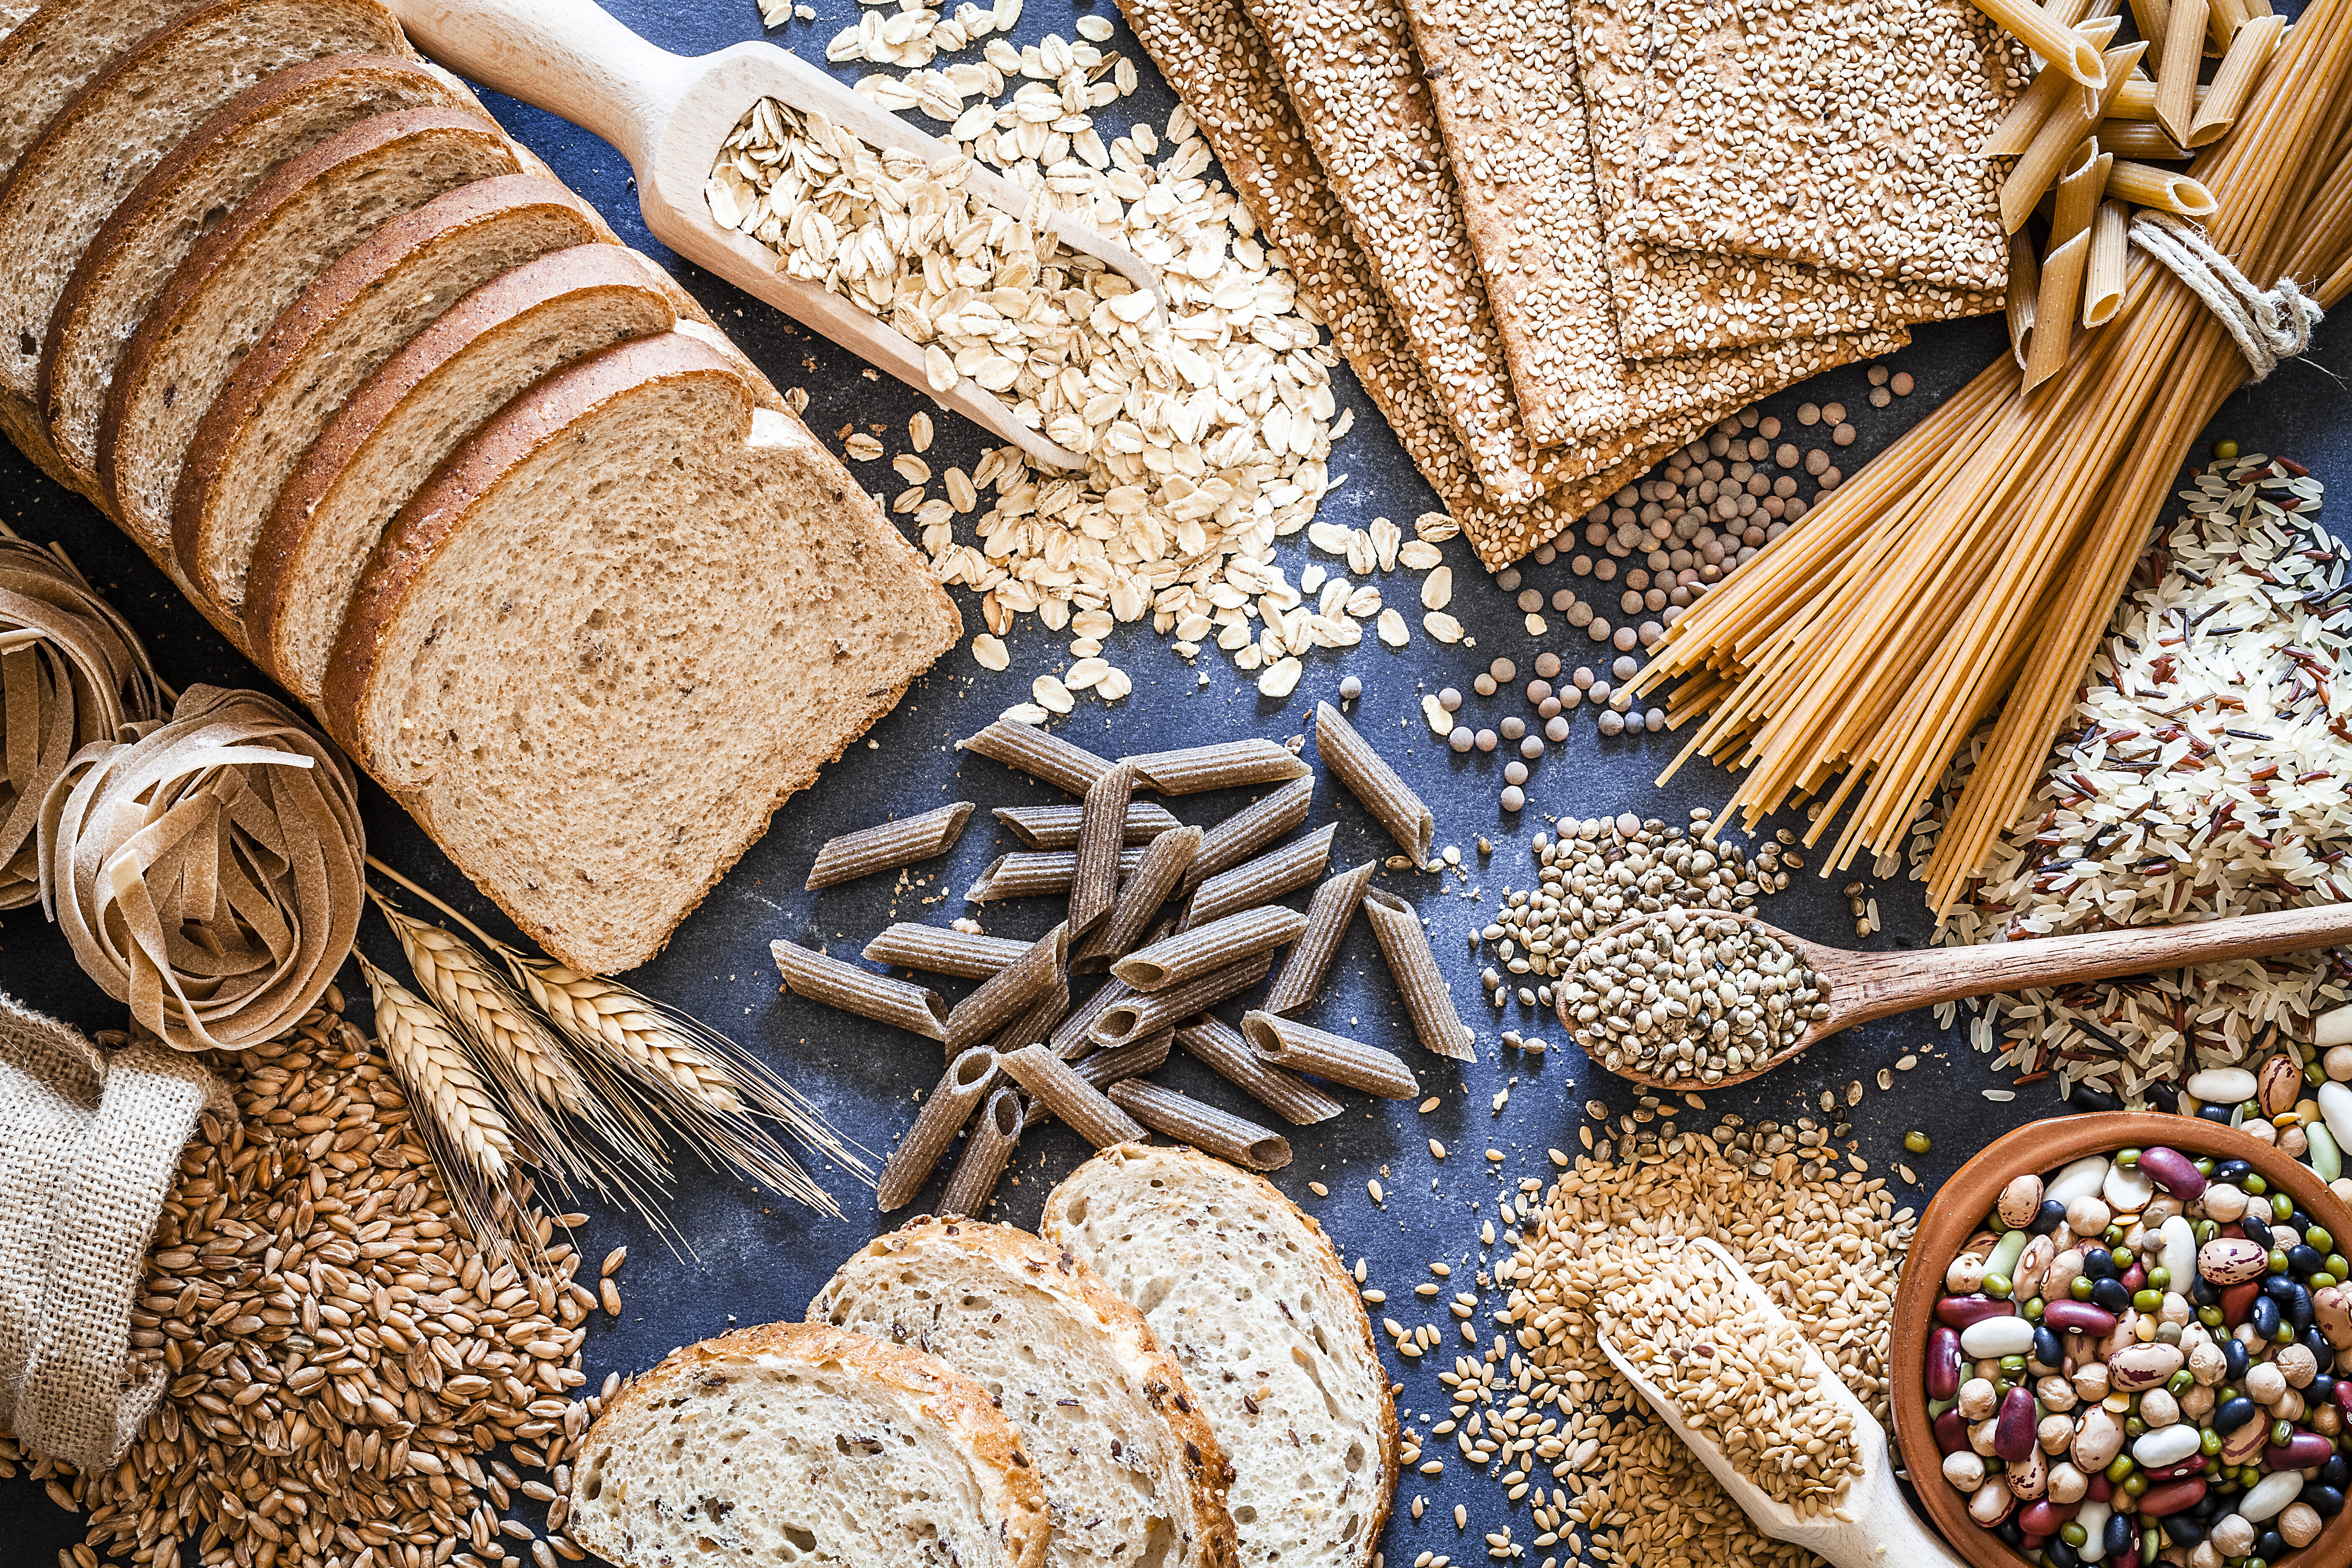 More than 18 million Americans are estimated to have nonceliac gluten sensitivity.